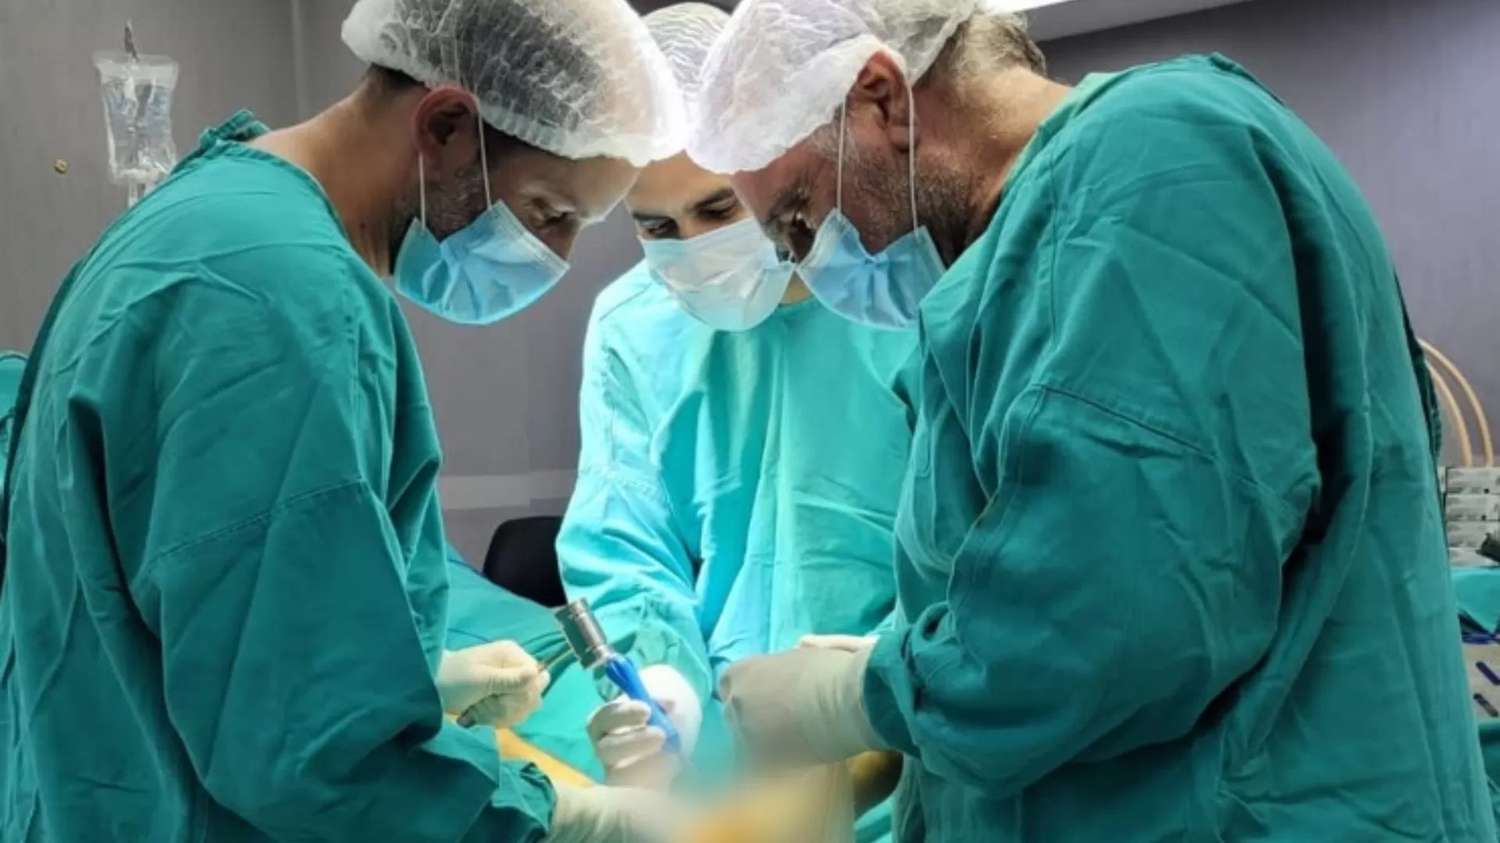 Tres cirujanos cardiovasculares participaron de la intervención.